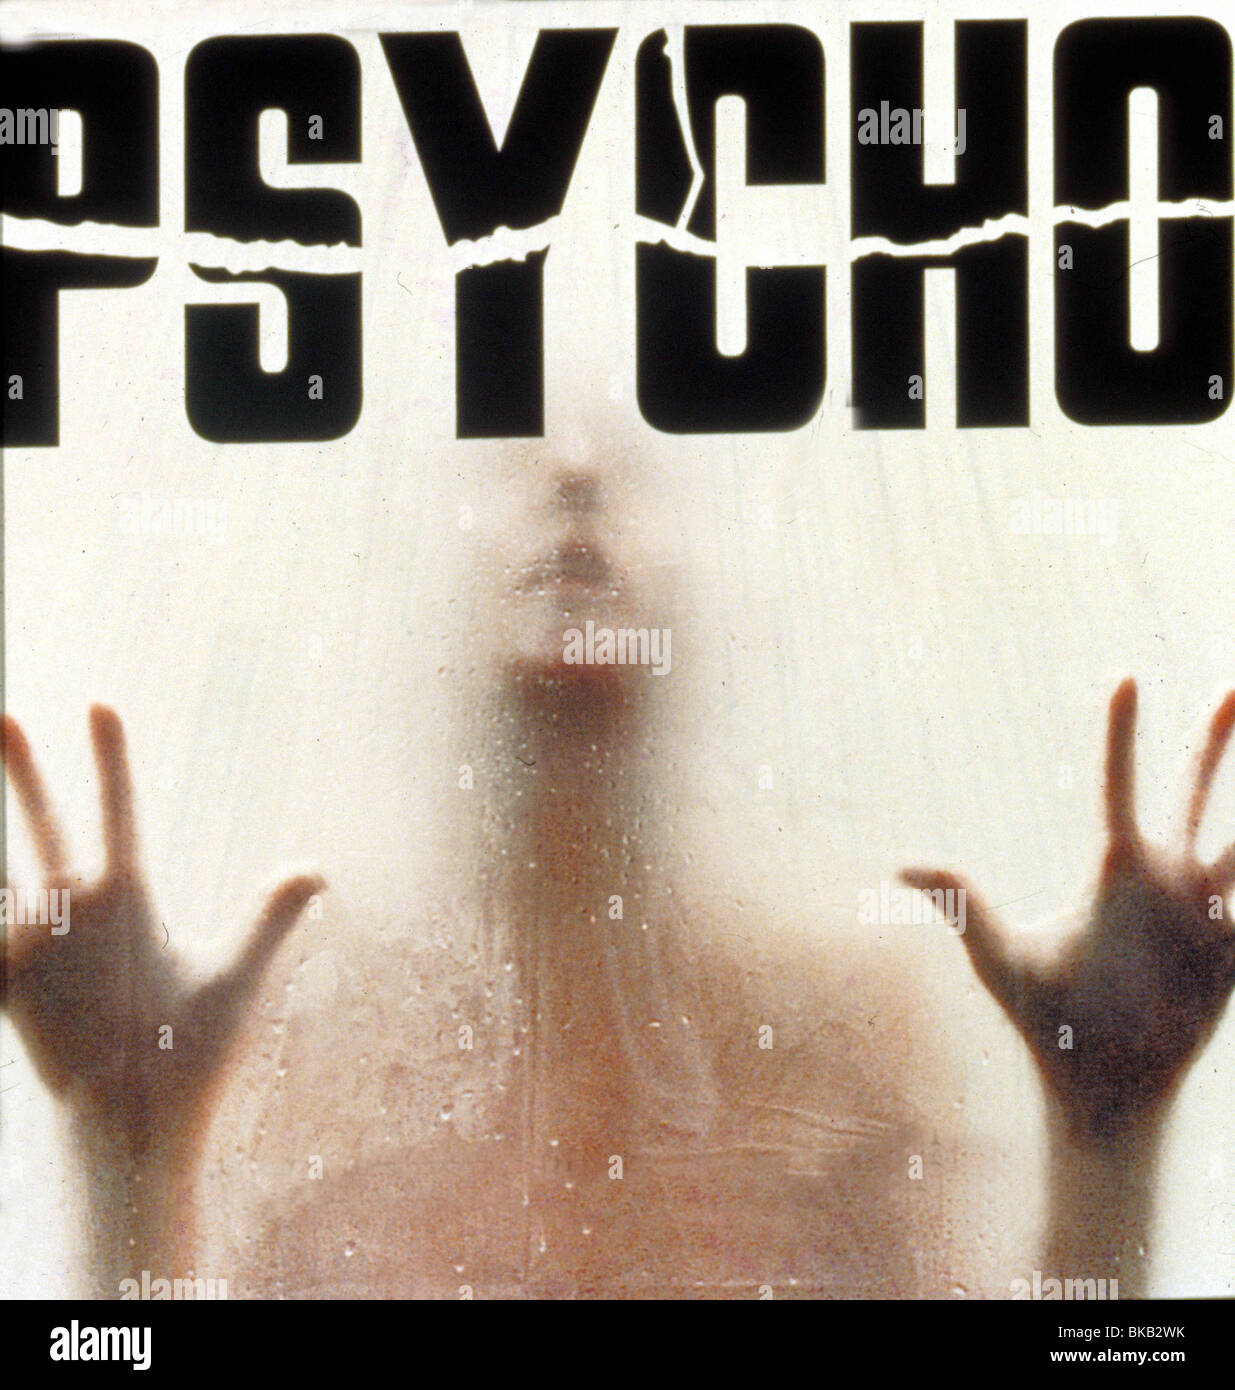 pelicula psycho 1998